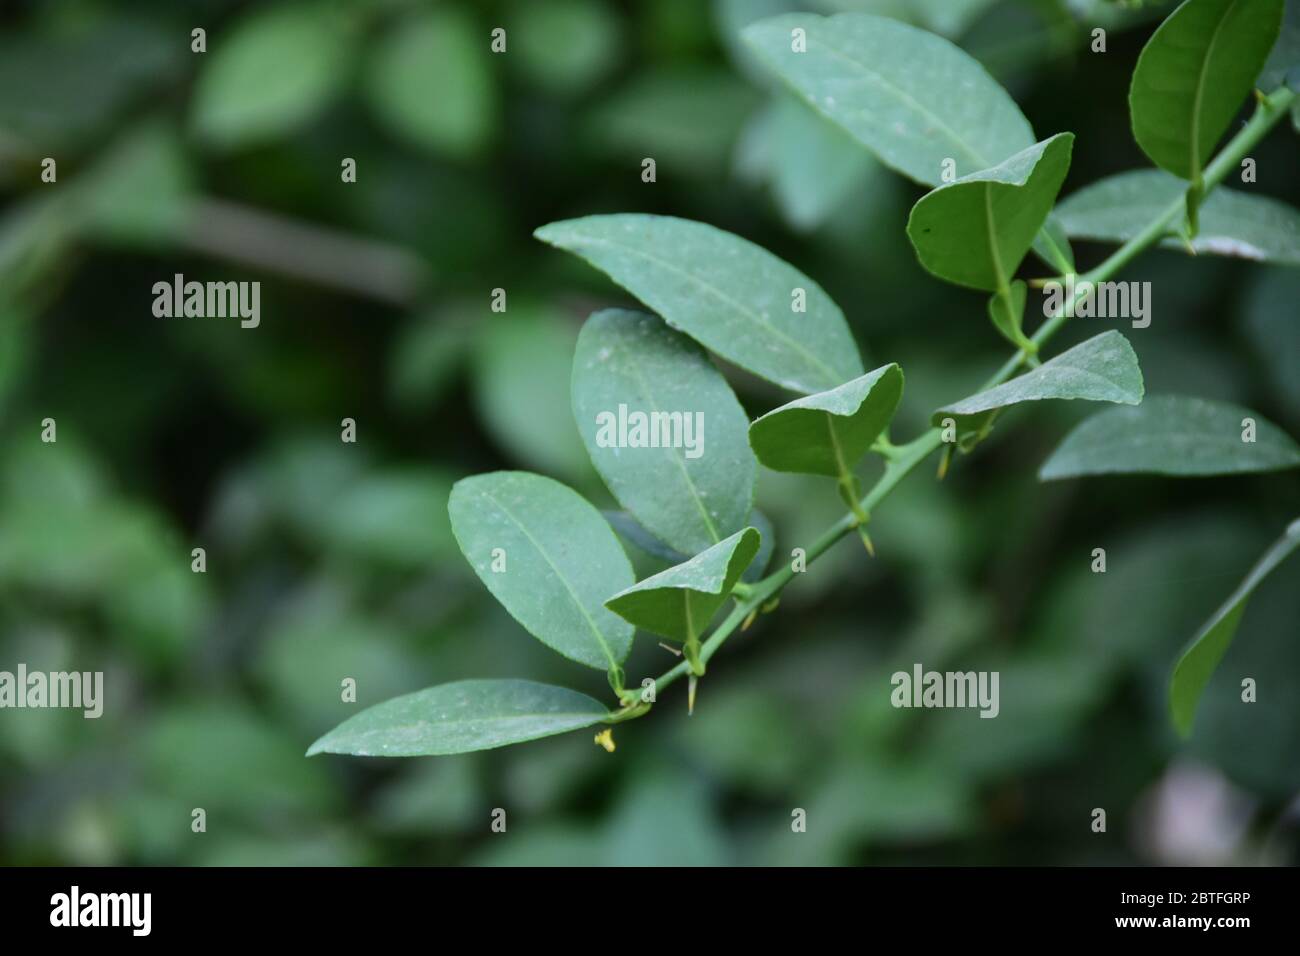 Beautiful view of green leaves of lemon tree Stock Photo